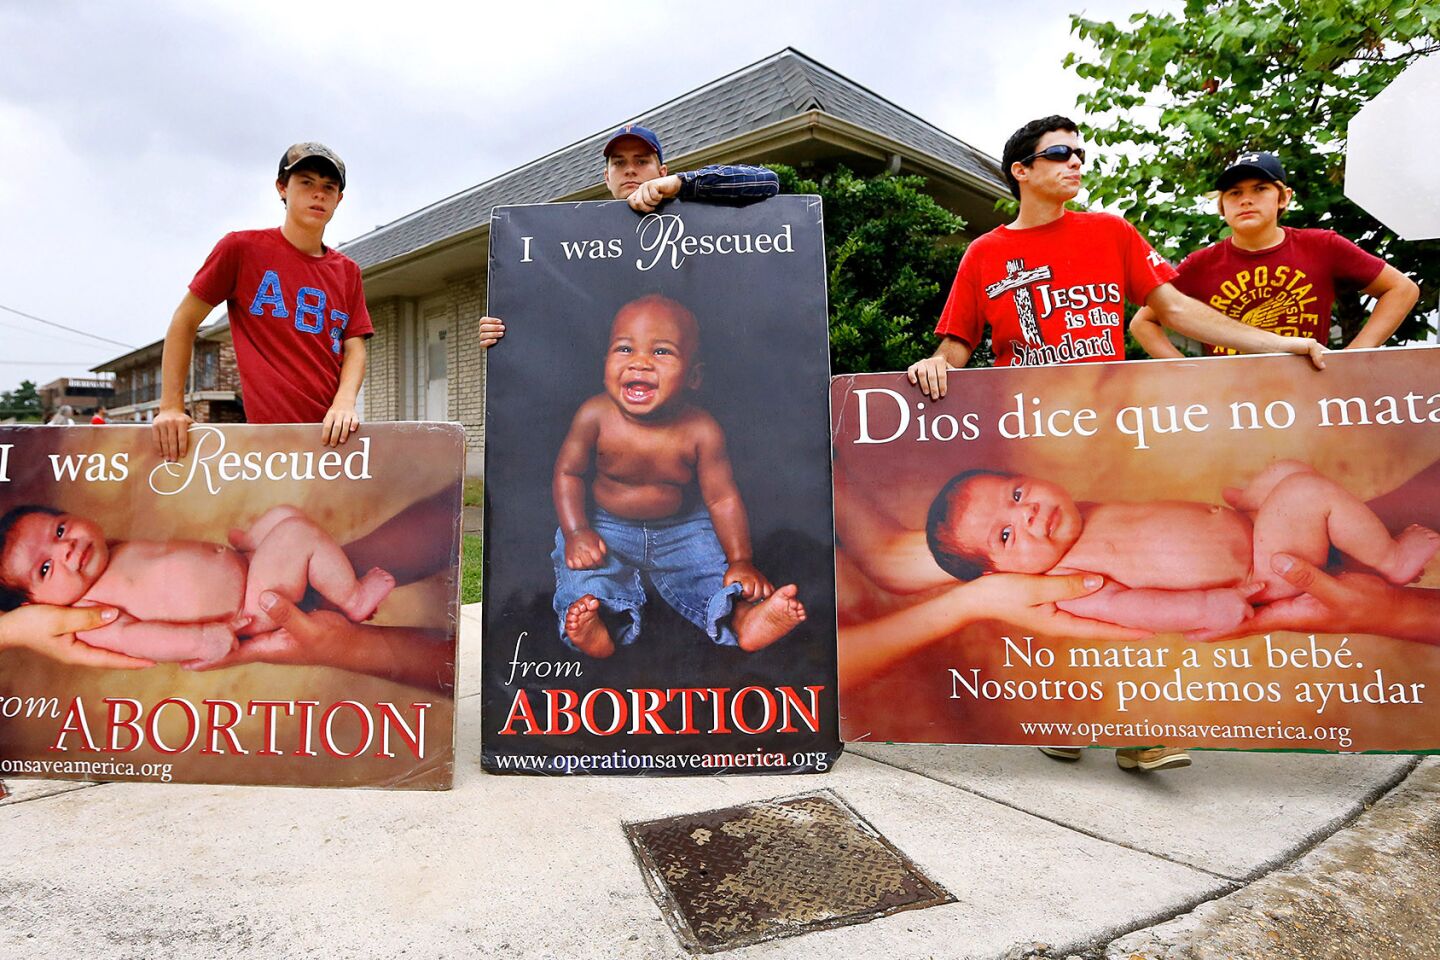 Abortion opponents in Louisiana